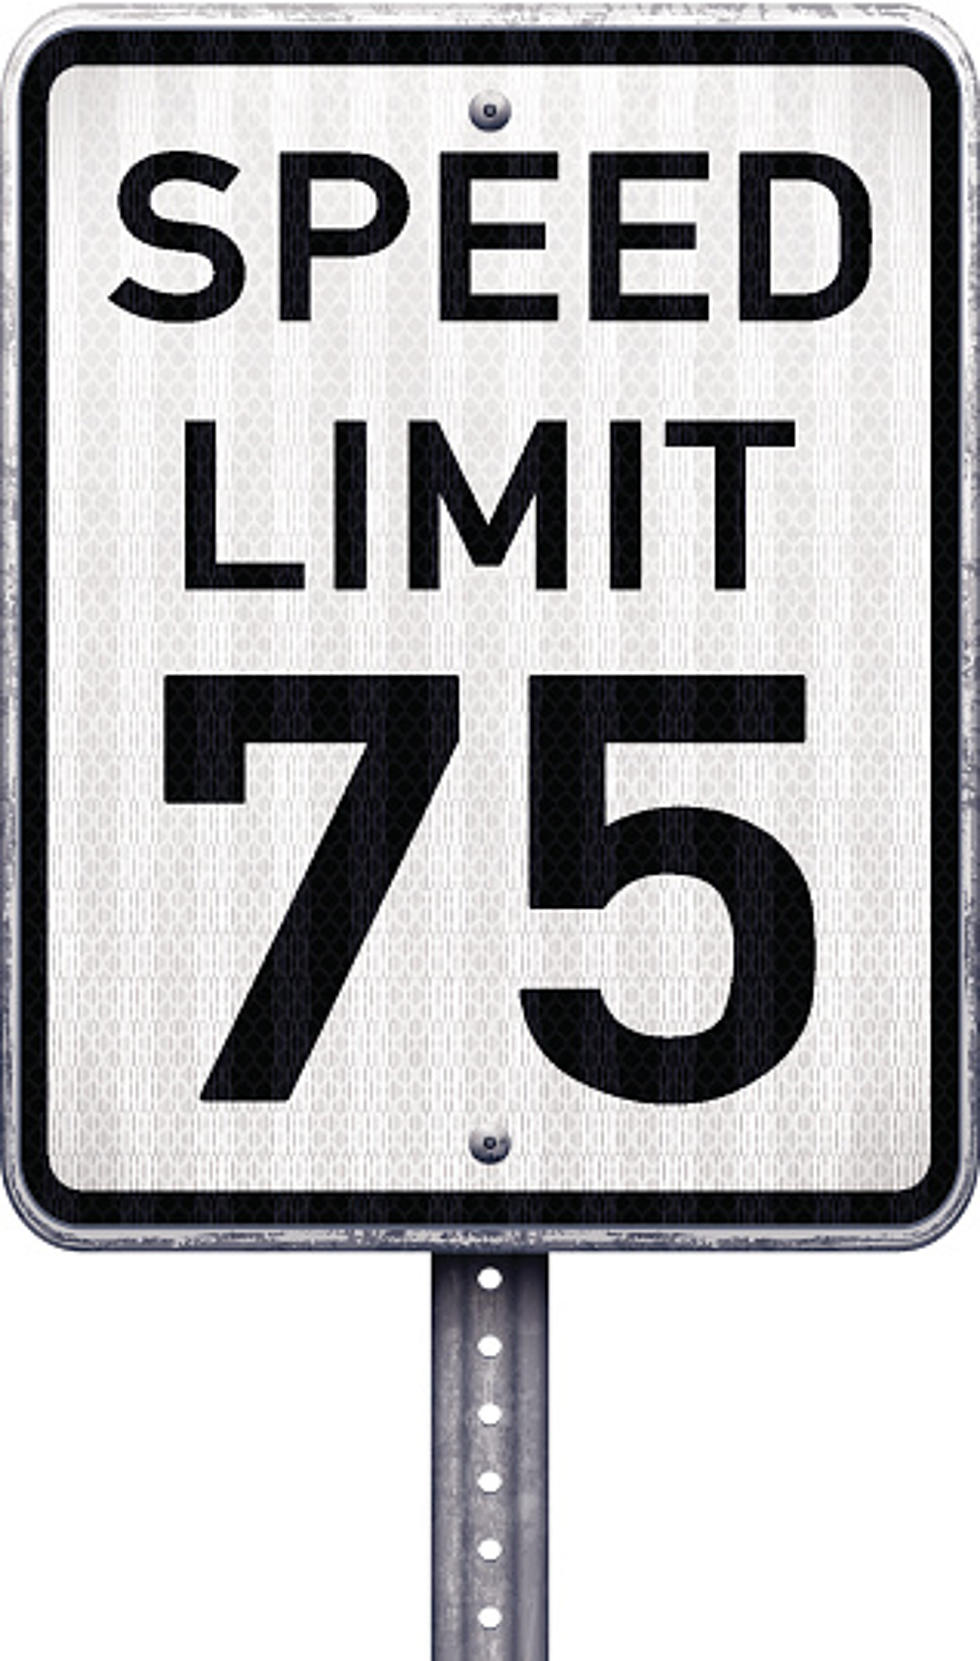 Illinois Lawmaker Wants To Raise The Speed Limit